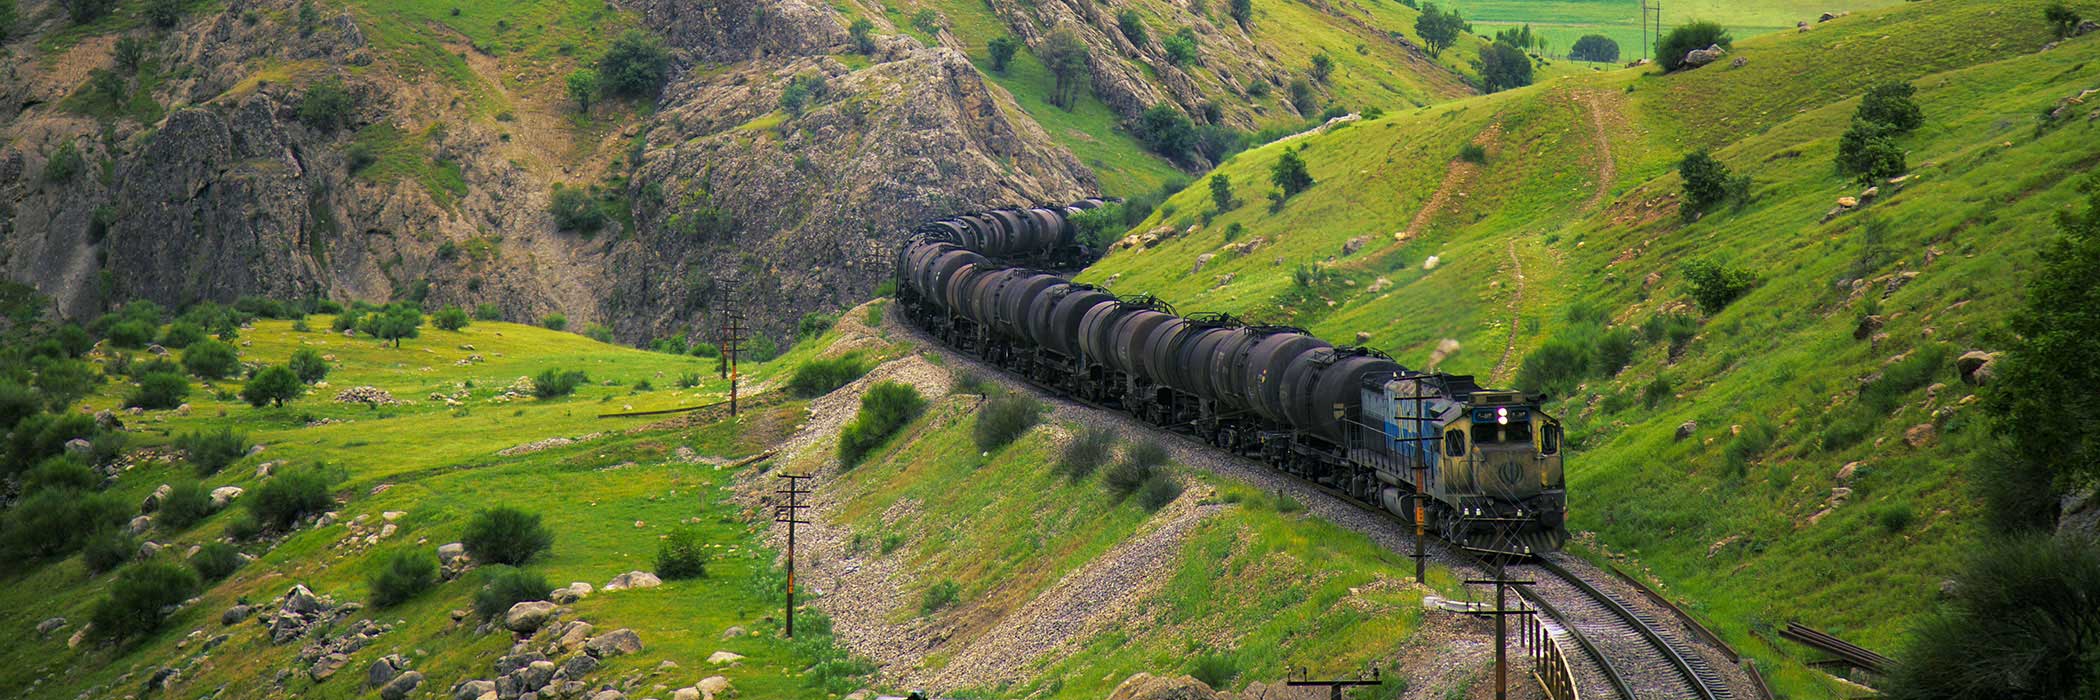 Freight train hauling tank wagons, Iran